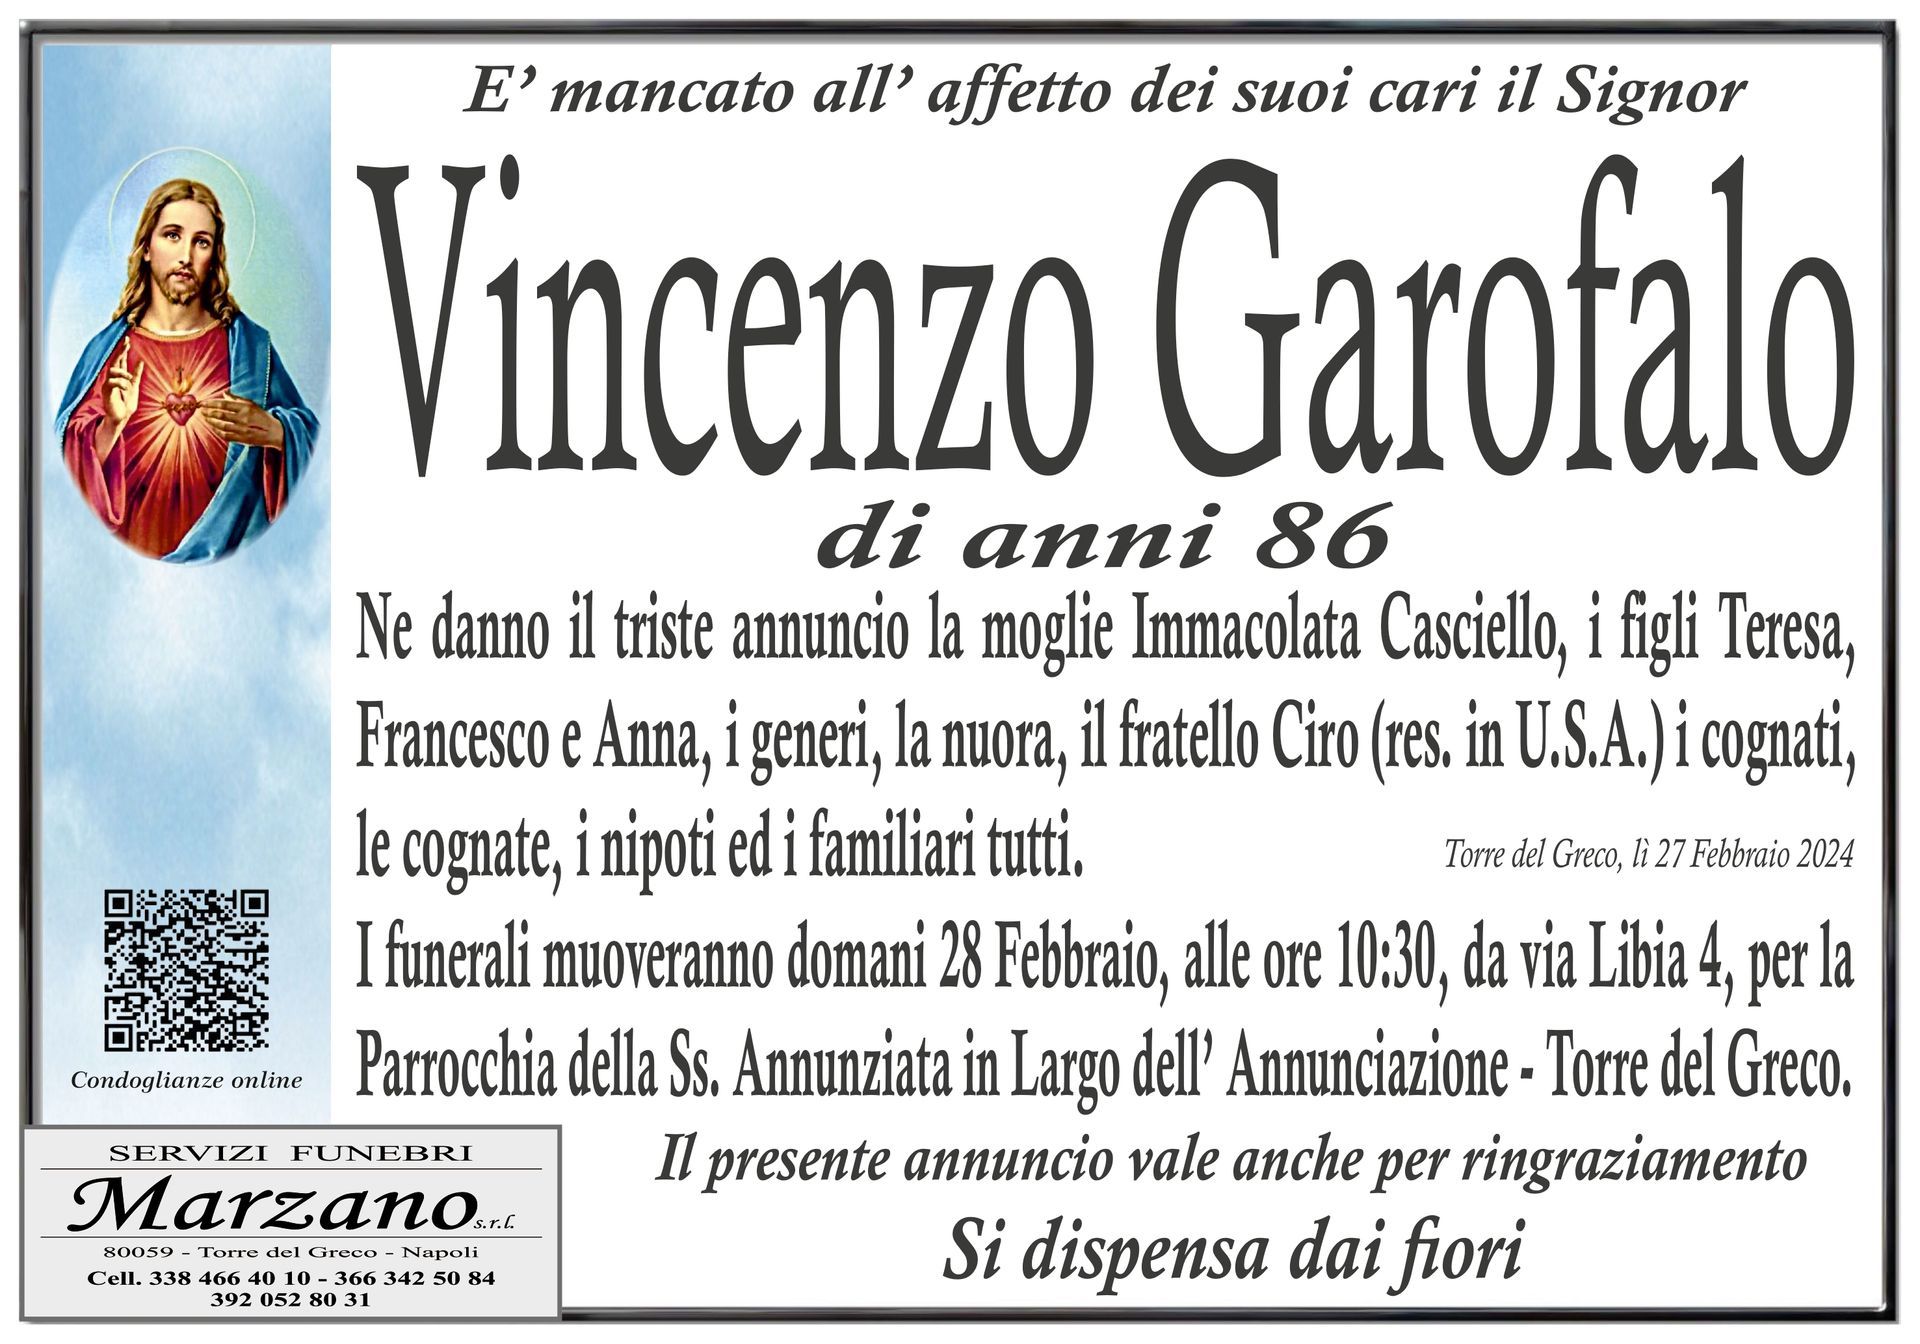 Vincenzo Garofalo